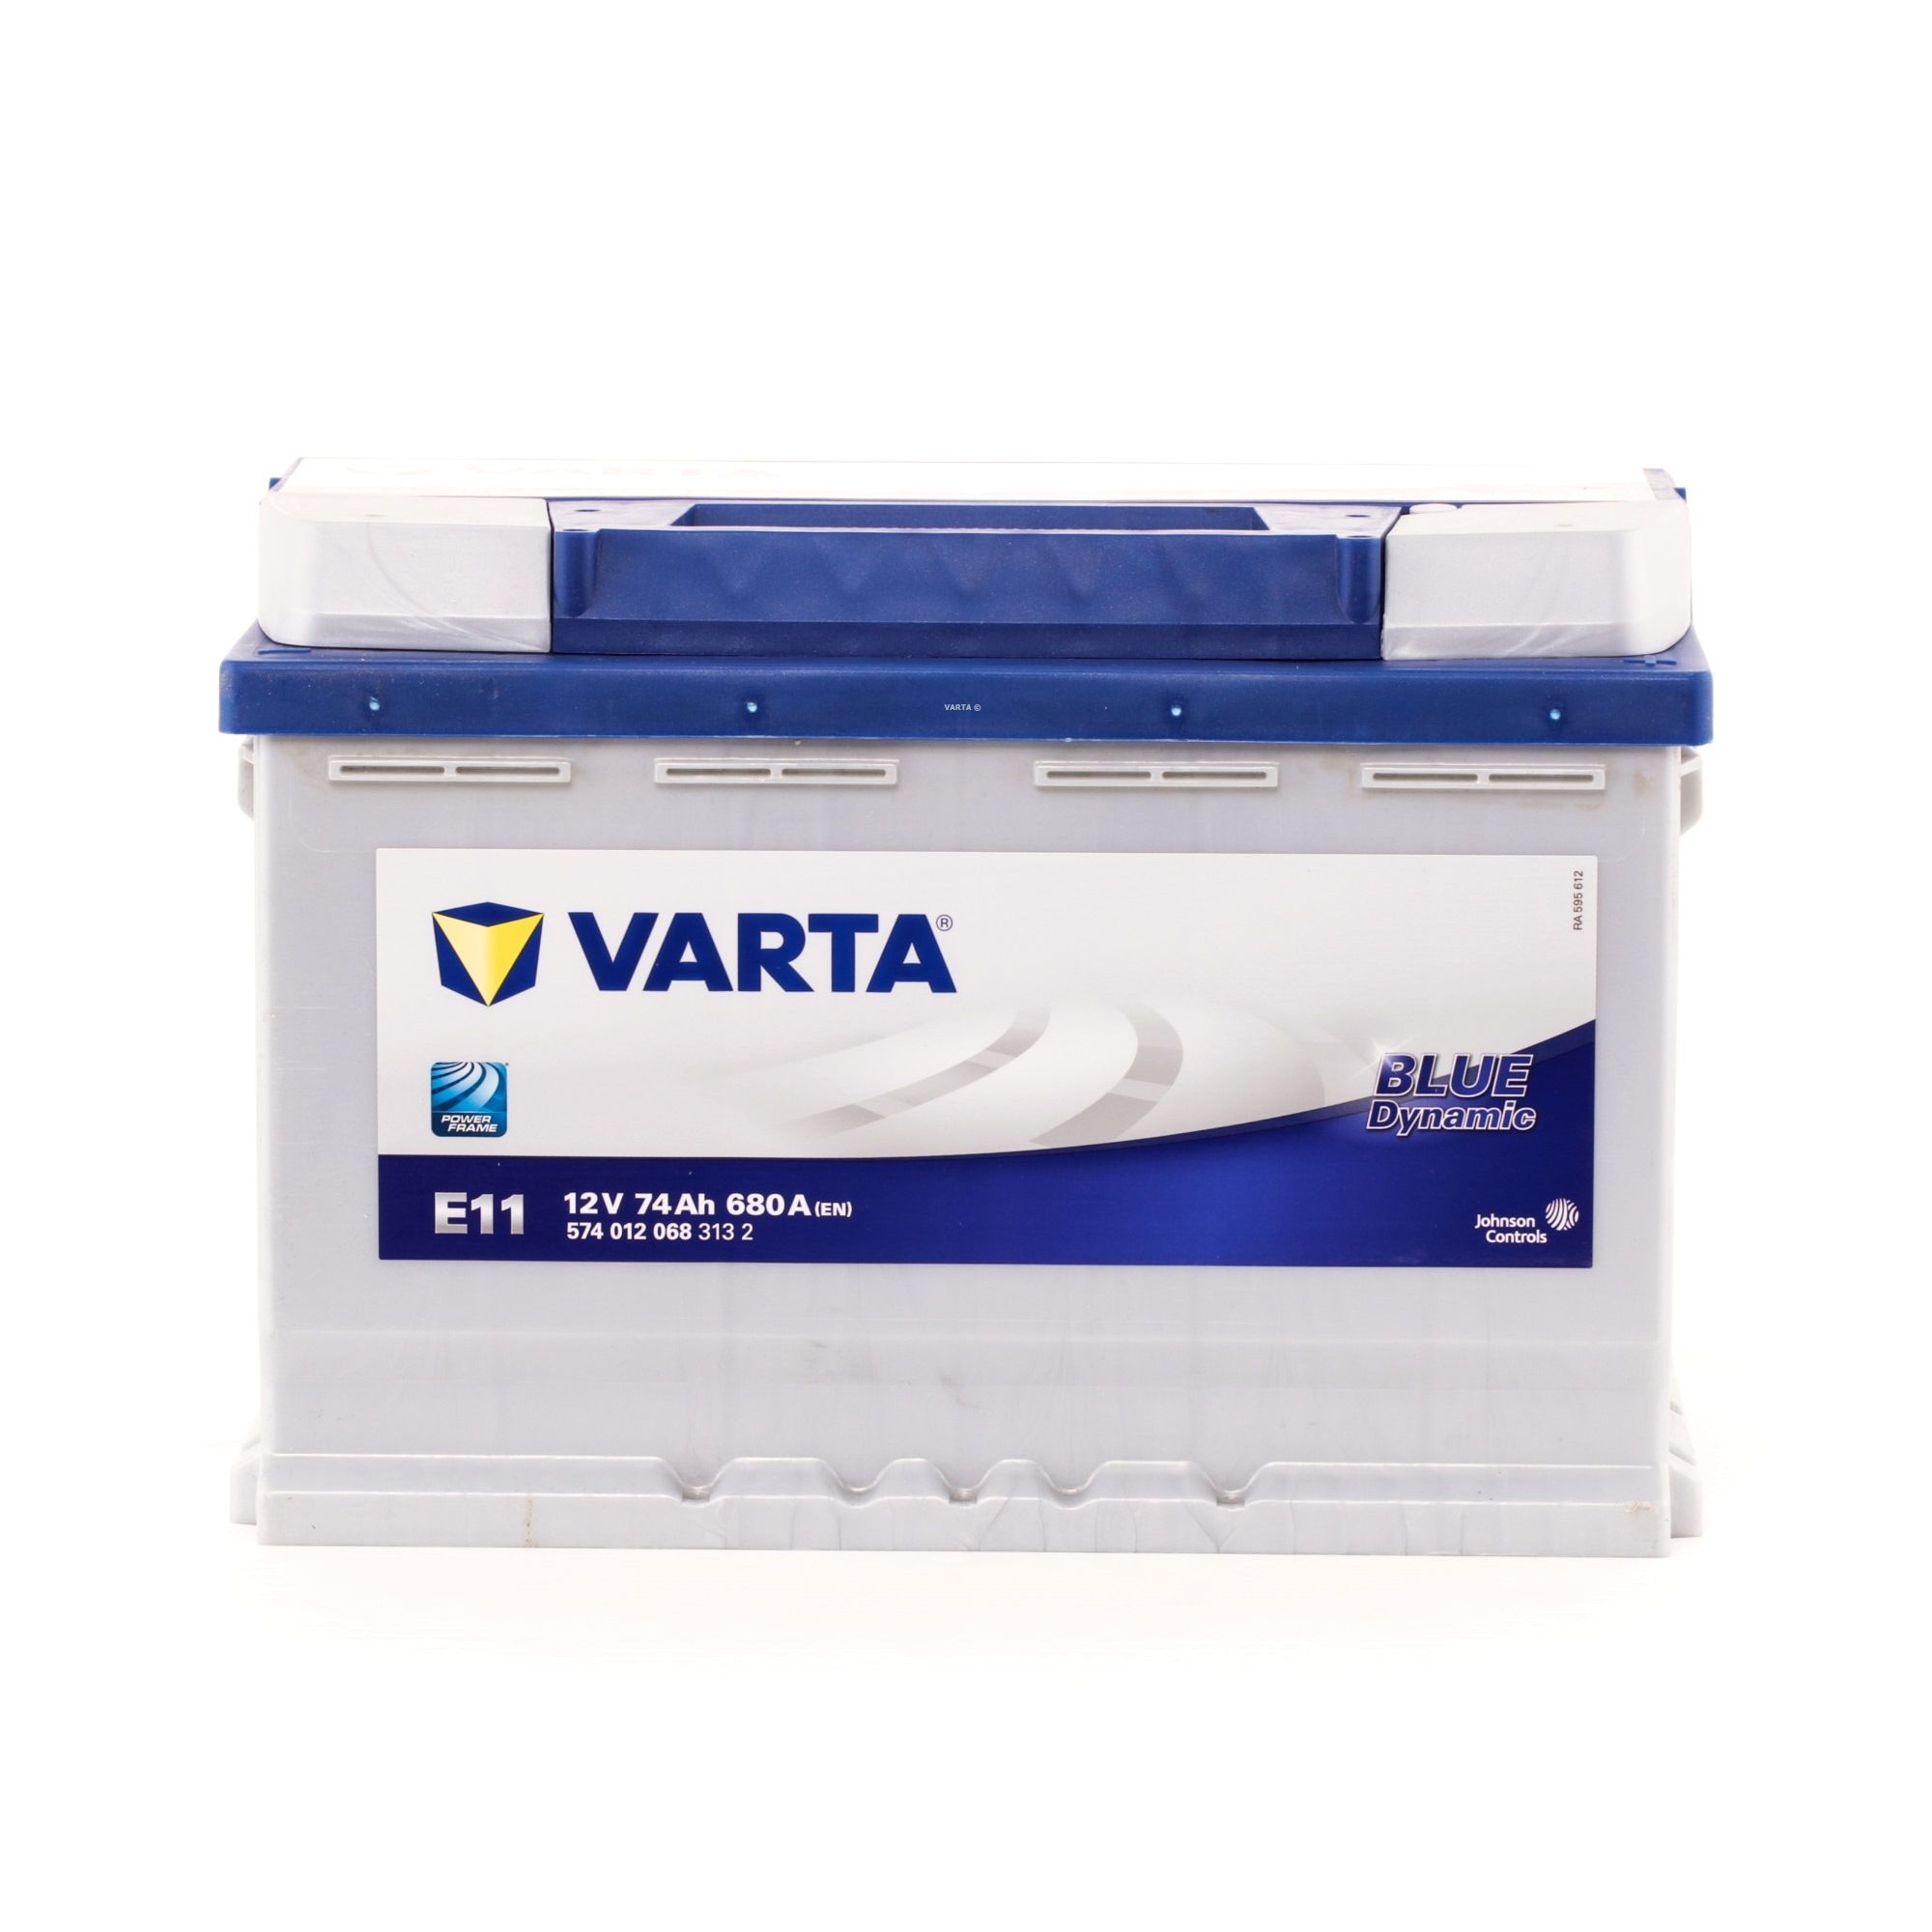 VARTA 5740120683132 d'origine MERCEDES-BENZ Batterie de démarrage 12V 74Ah 680A B13 Batterie au plomb